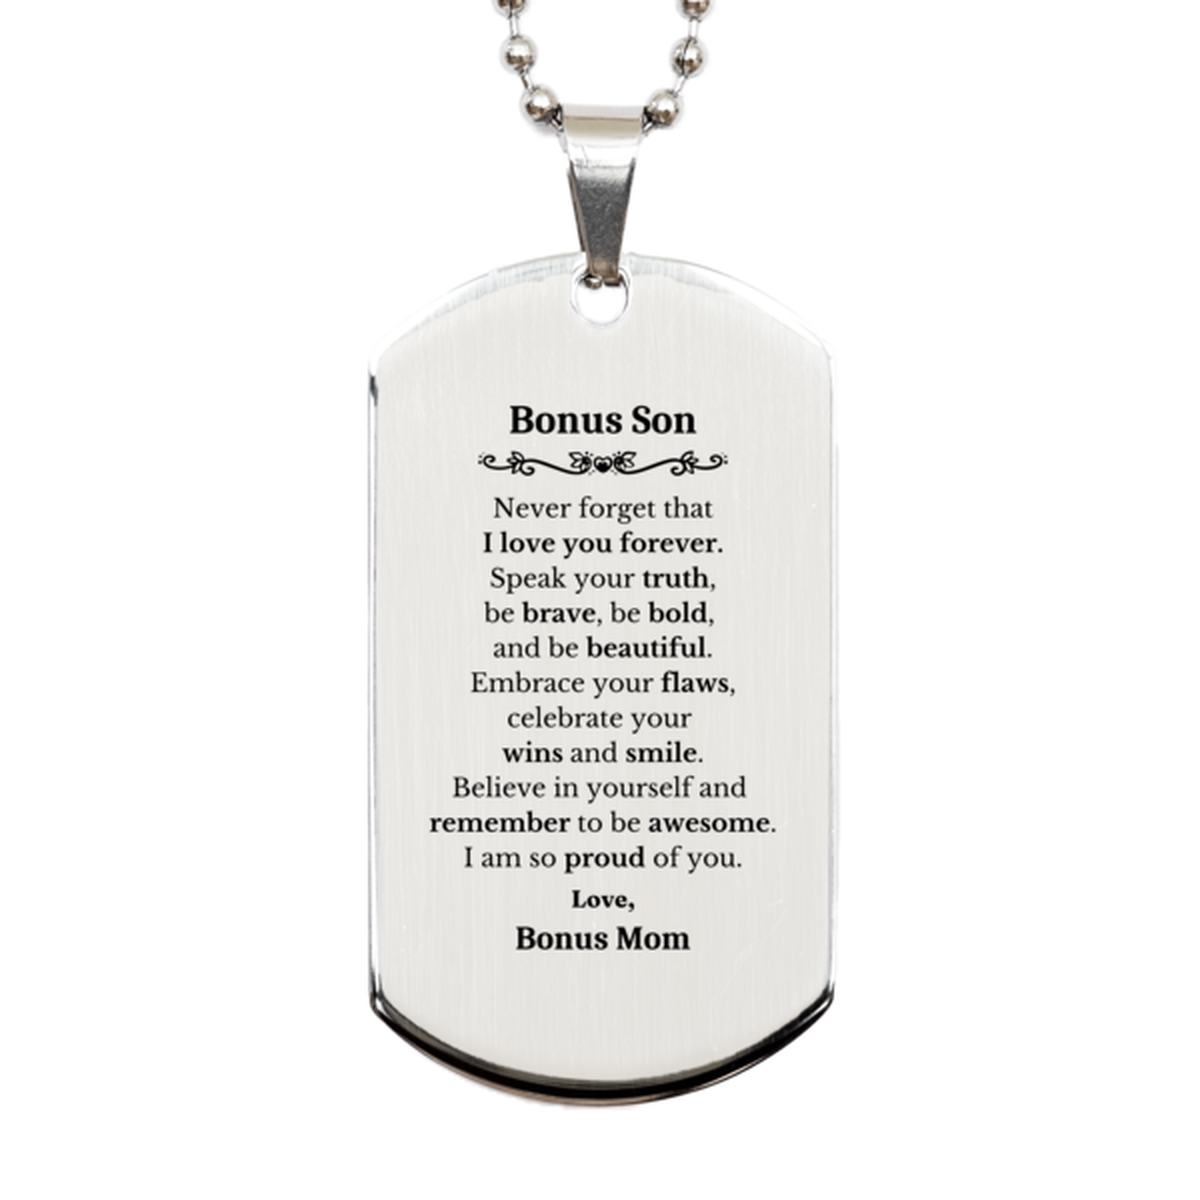 Bonus Son Silver Dog Tag, Never forget that I love you forever, Inspirational Bonus Son Birthday Unique Gifts From Bonus Mom